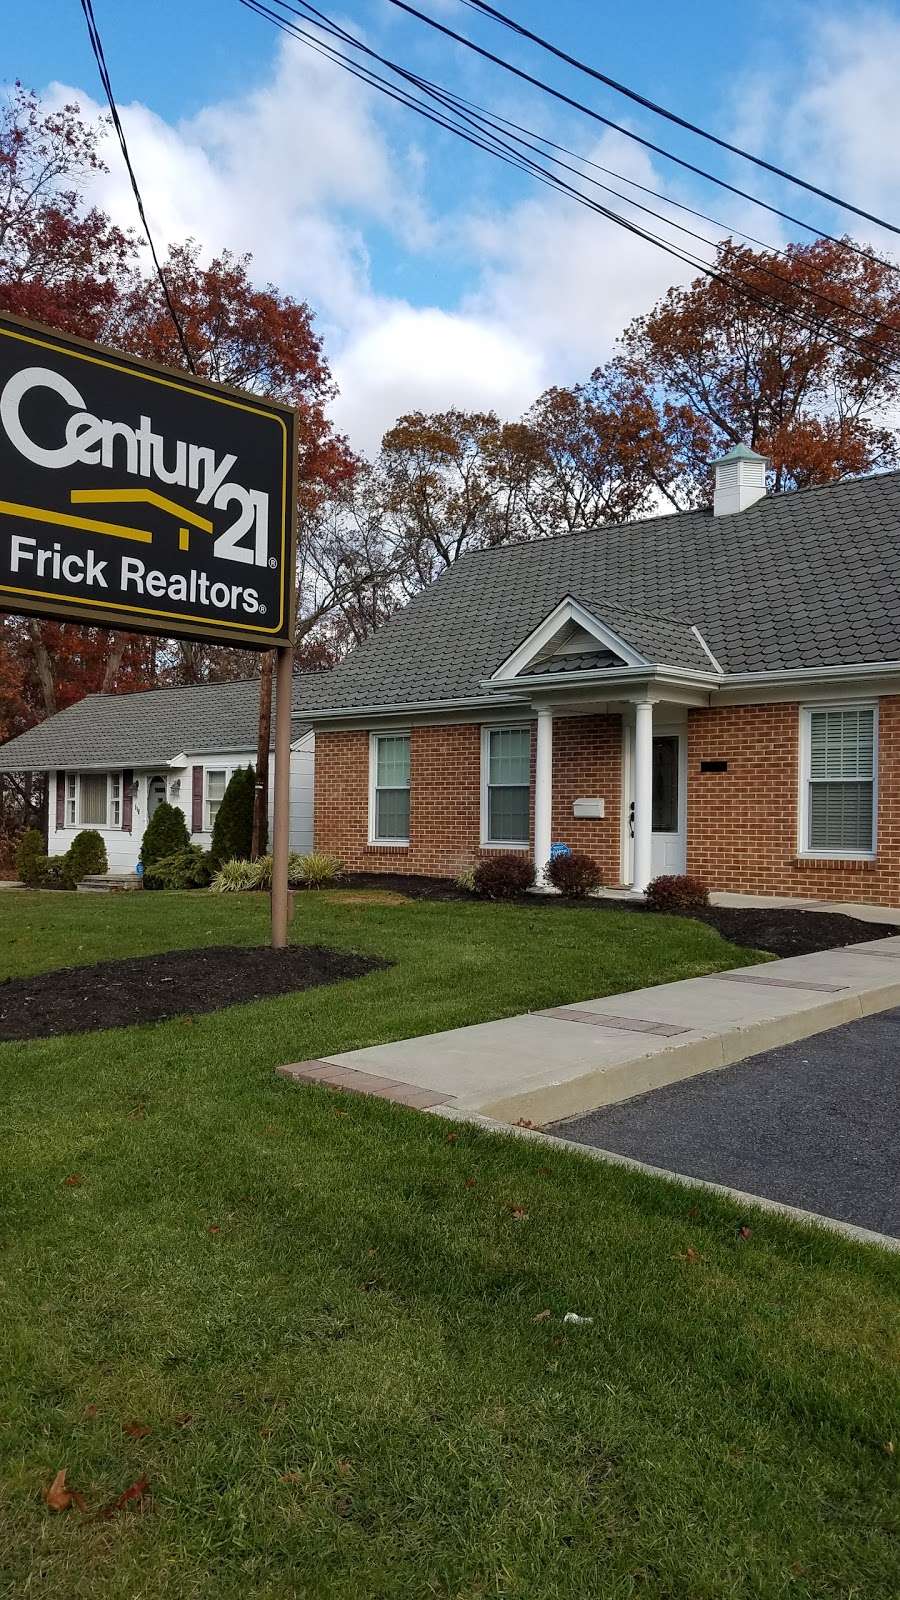 Century 21 Frick Realtors | 117 W White Horse Pike, Galloway, NJ 08205, USA | Phone: (609) 652-5600